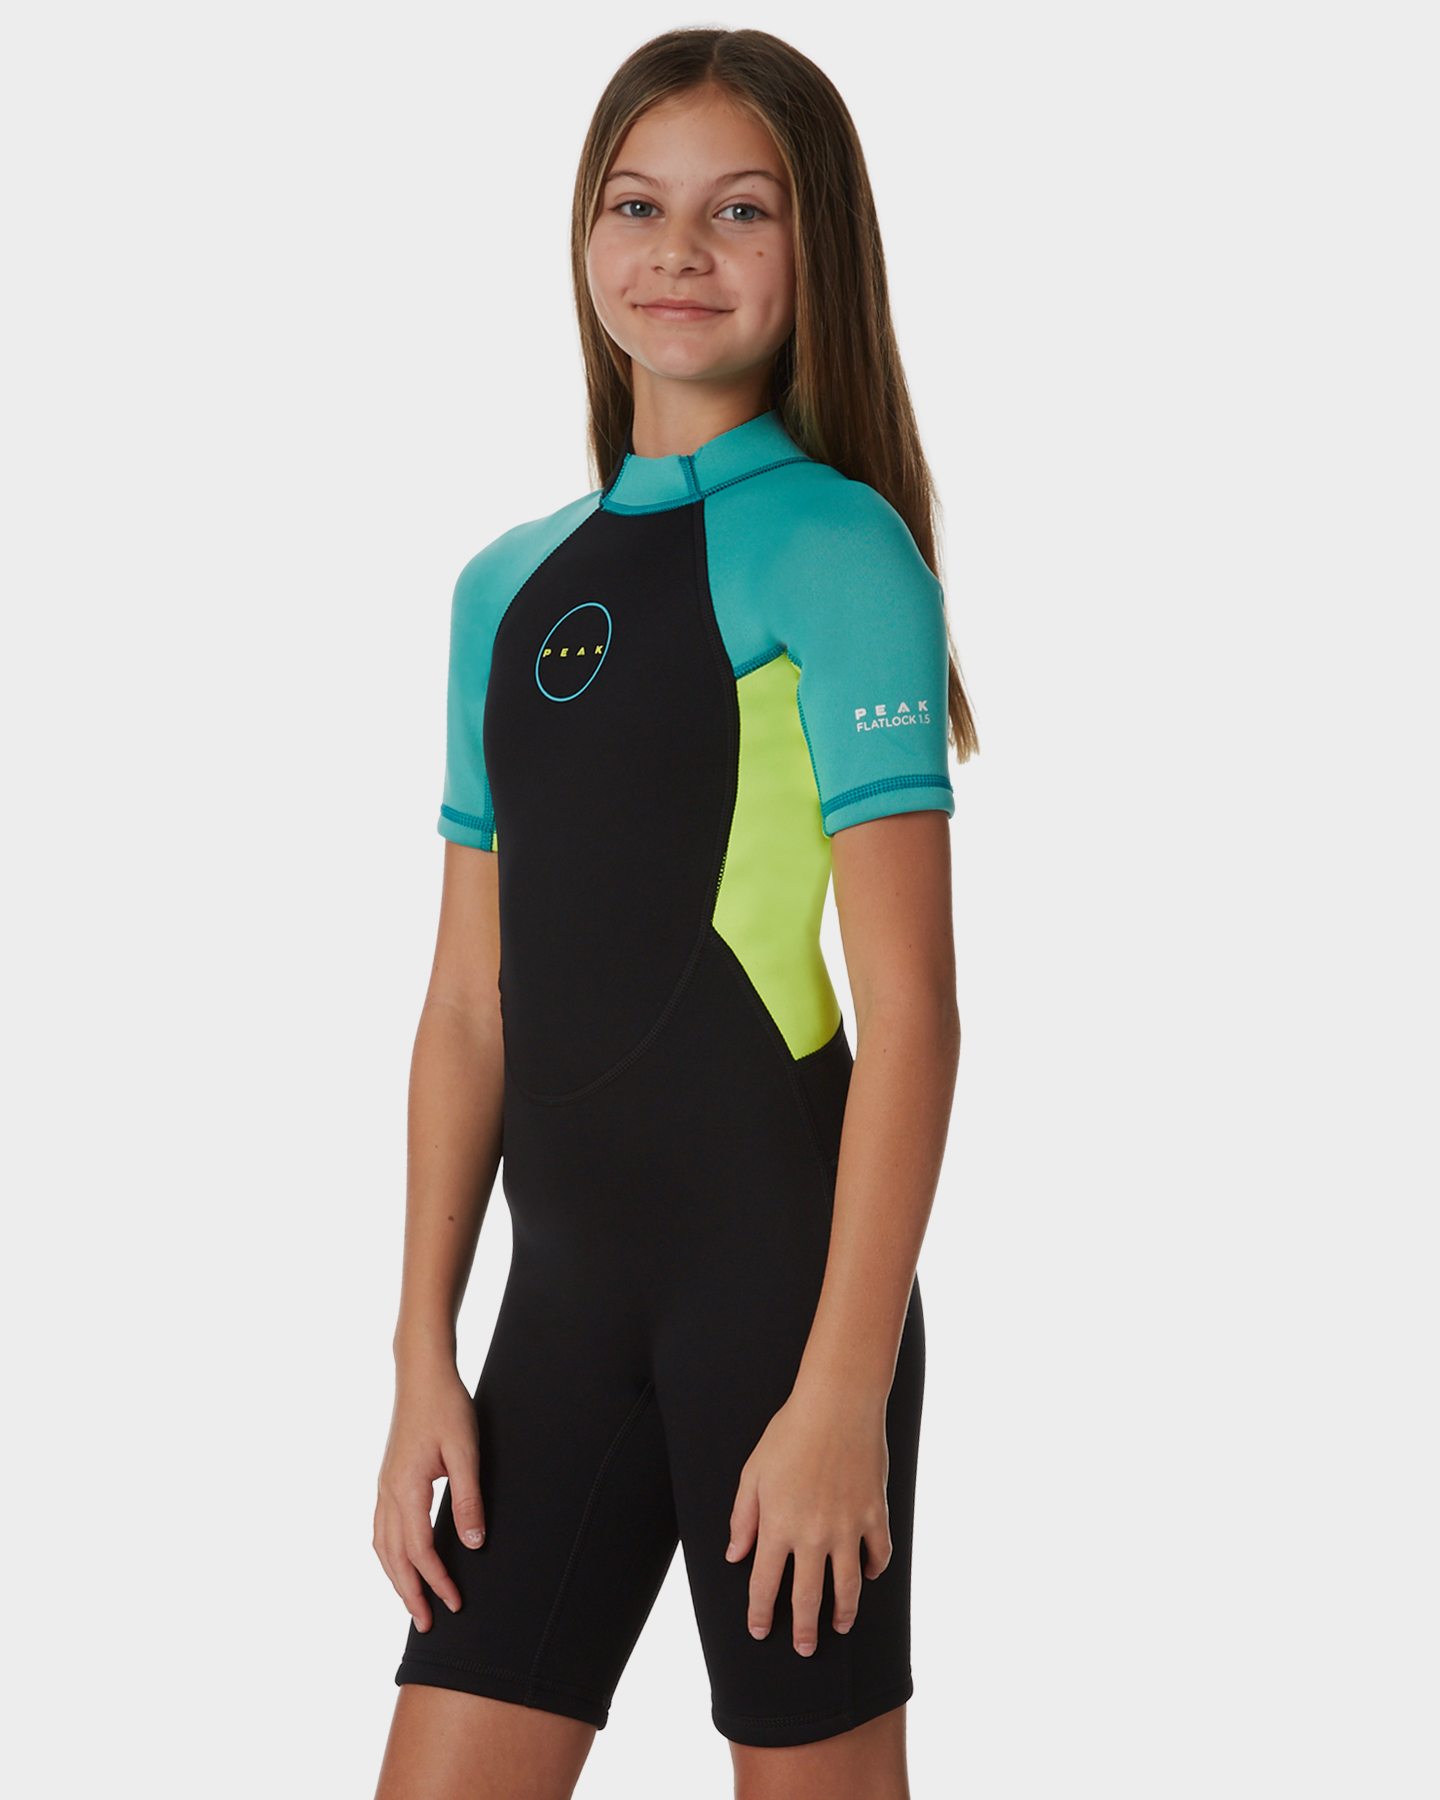 Peak Girls Energy Ss Springsuit Wetsuit - Turquoise | SurfStitch